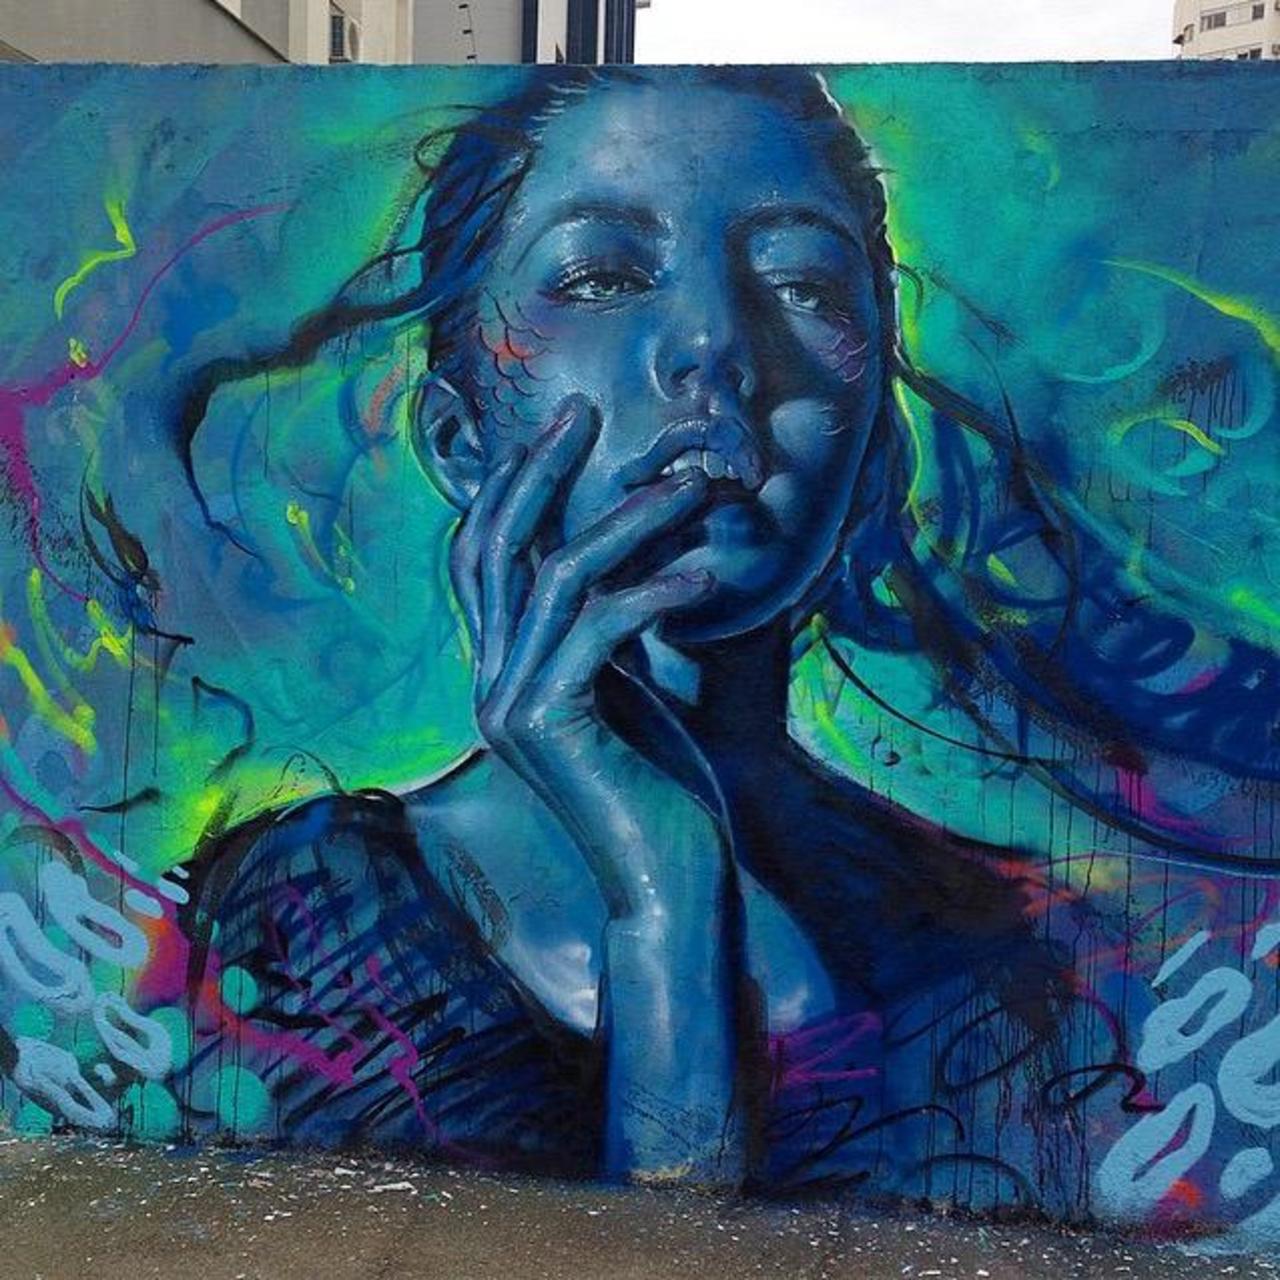 Thiago Valdi new Street Art piece titled 'Day Dreamer'

#art #mural #graffiti #streetart http://t.co/Lc79yUt4oe